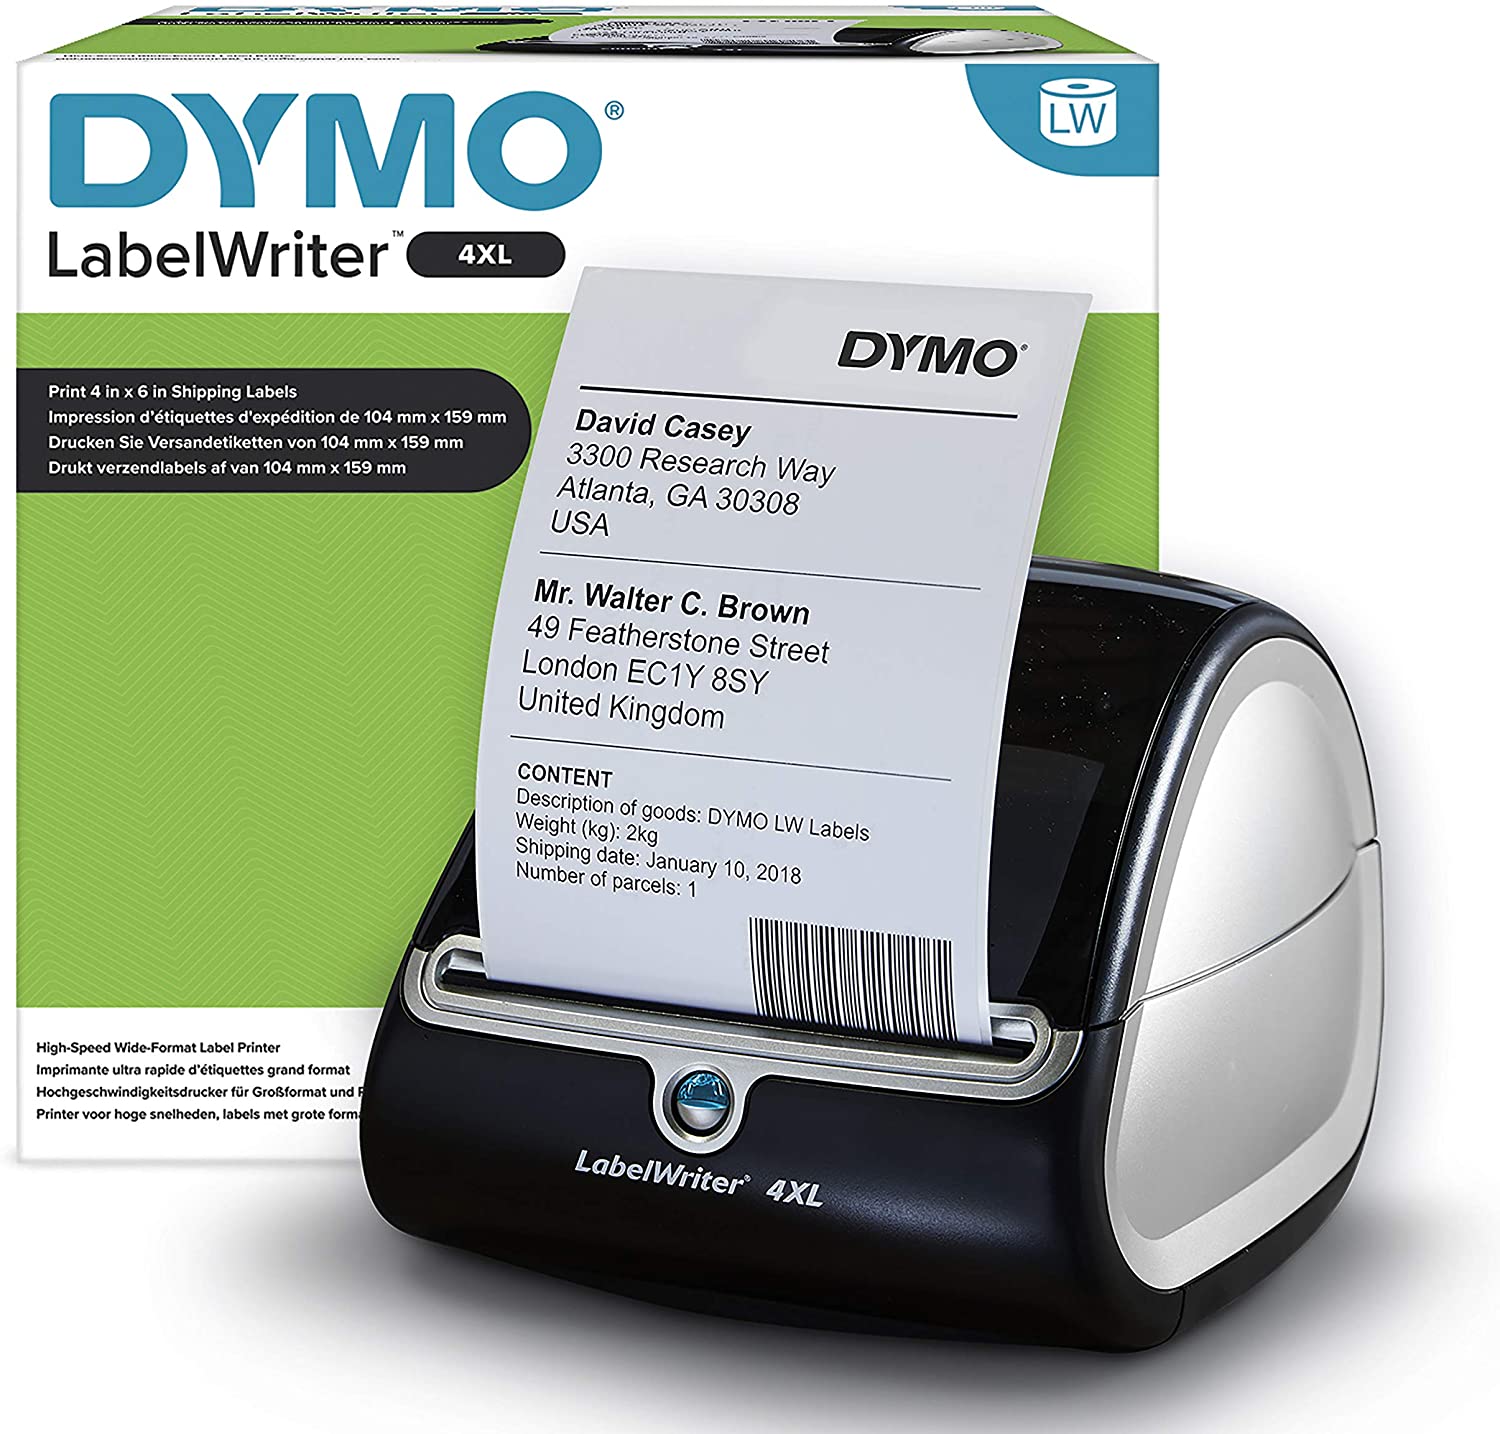 dymo printer driver for mac